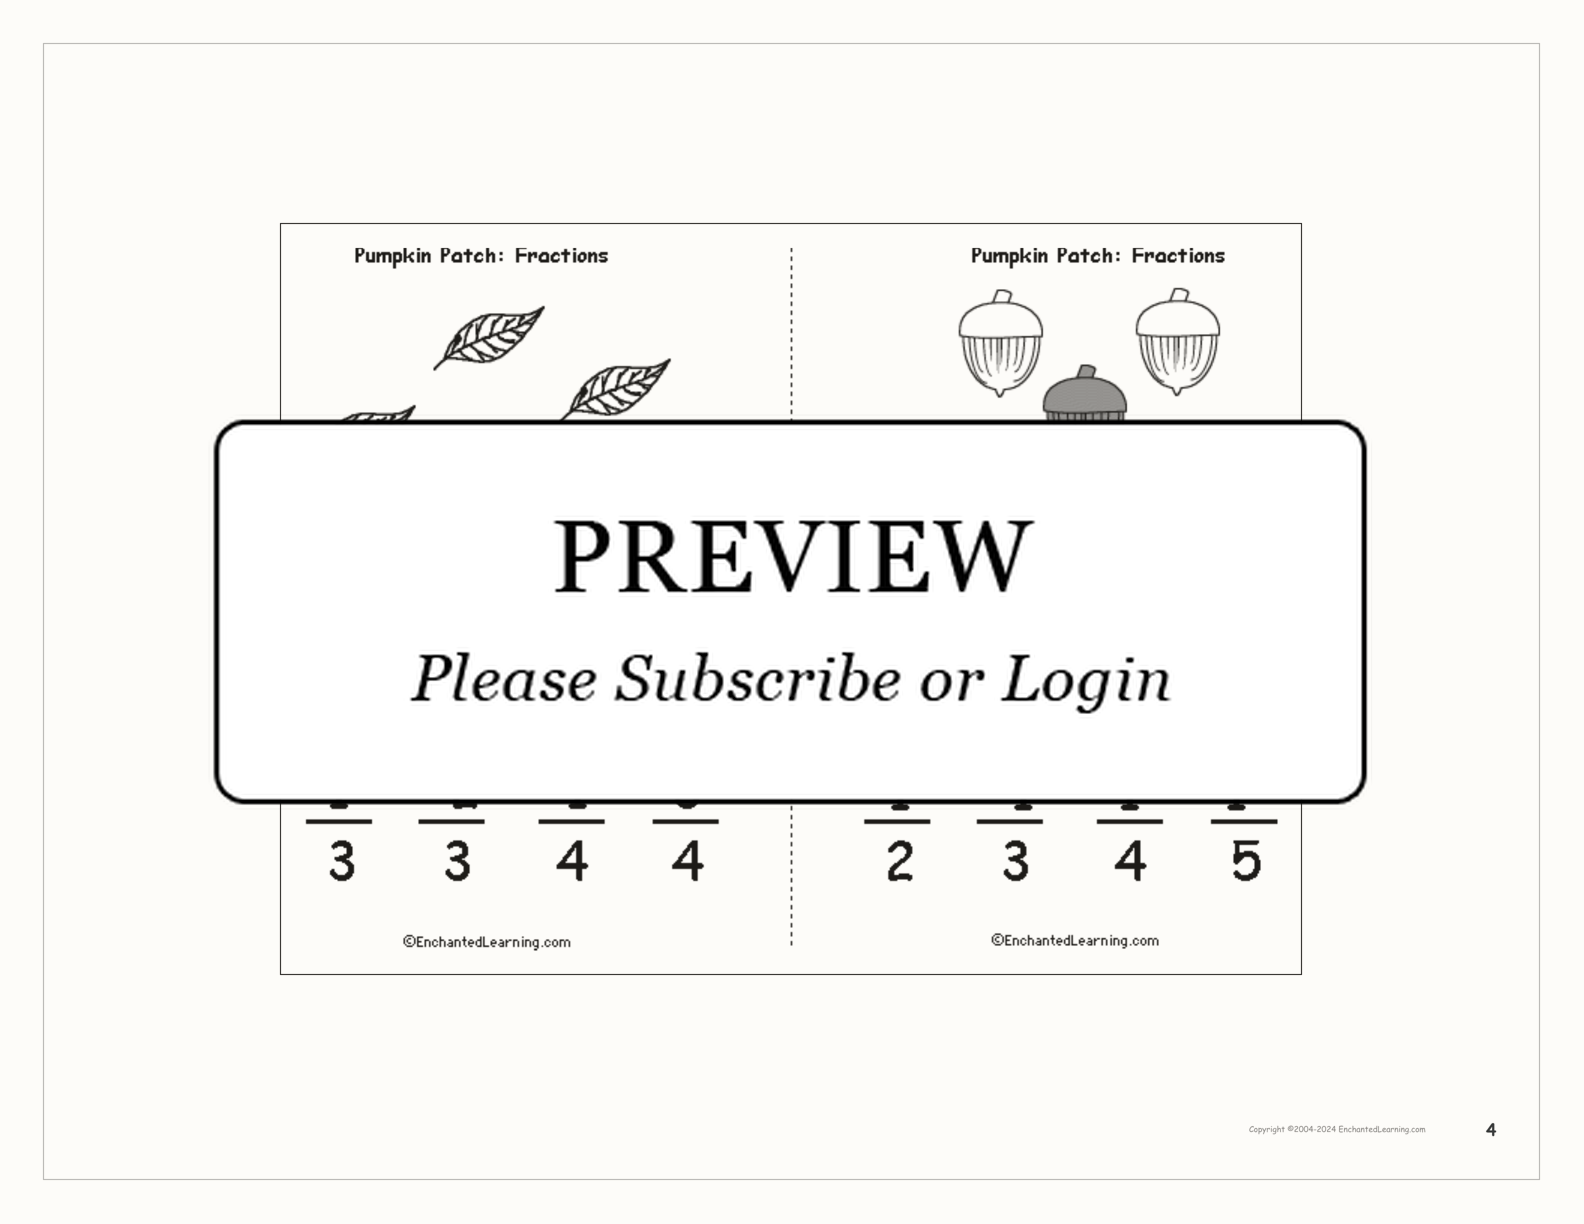 Pumpkin Patch: Fractions Book interactive printout page 4